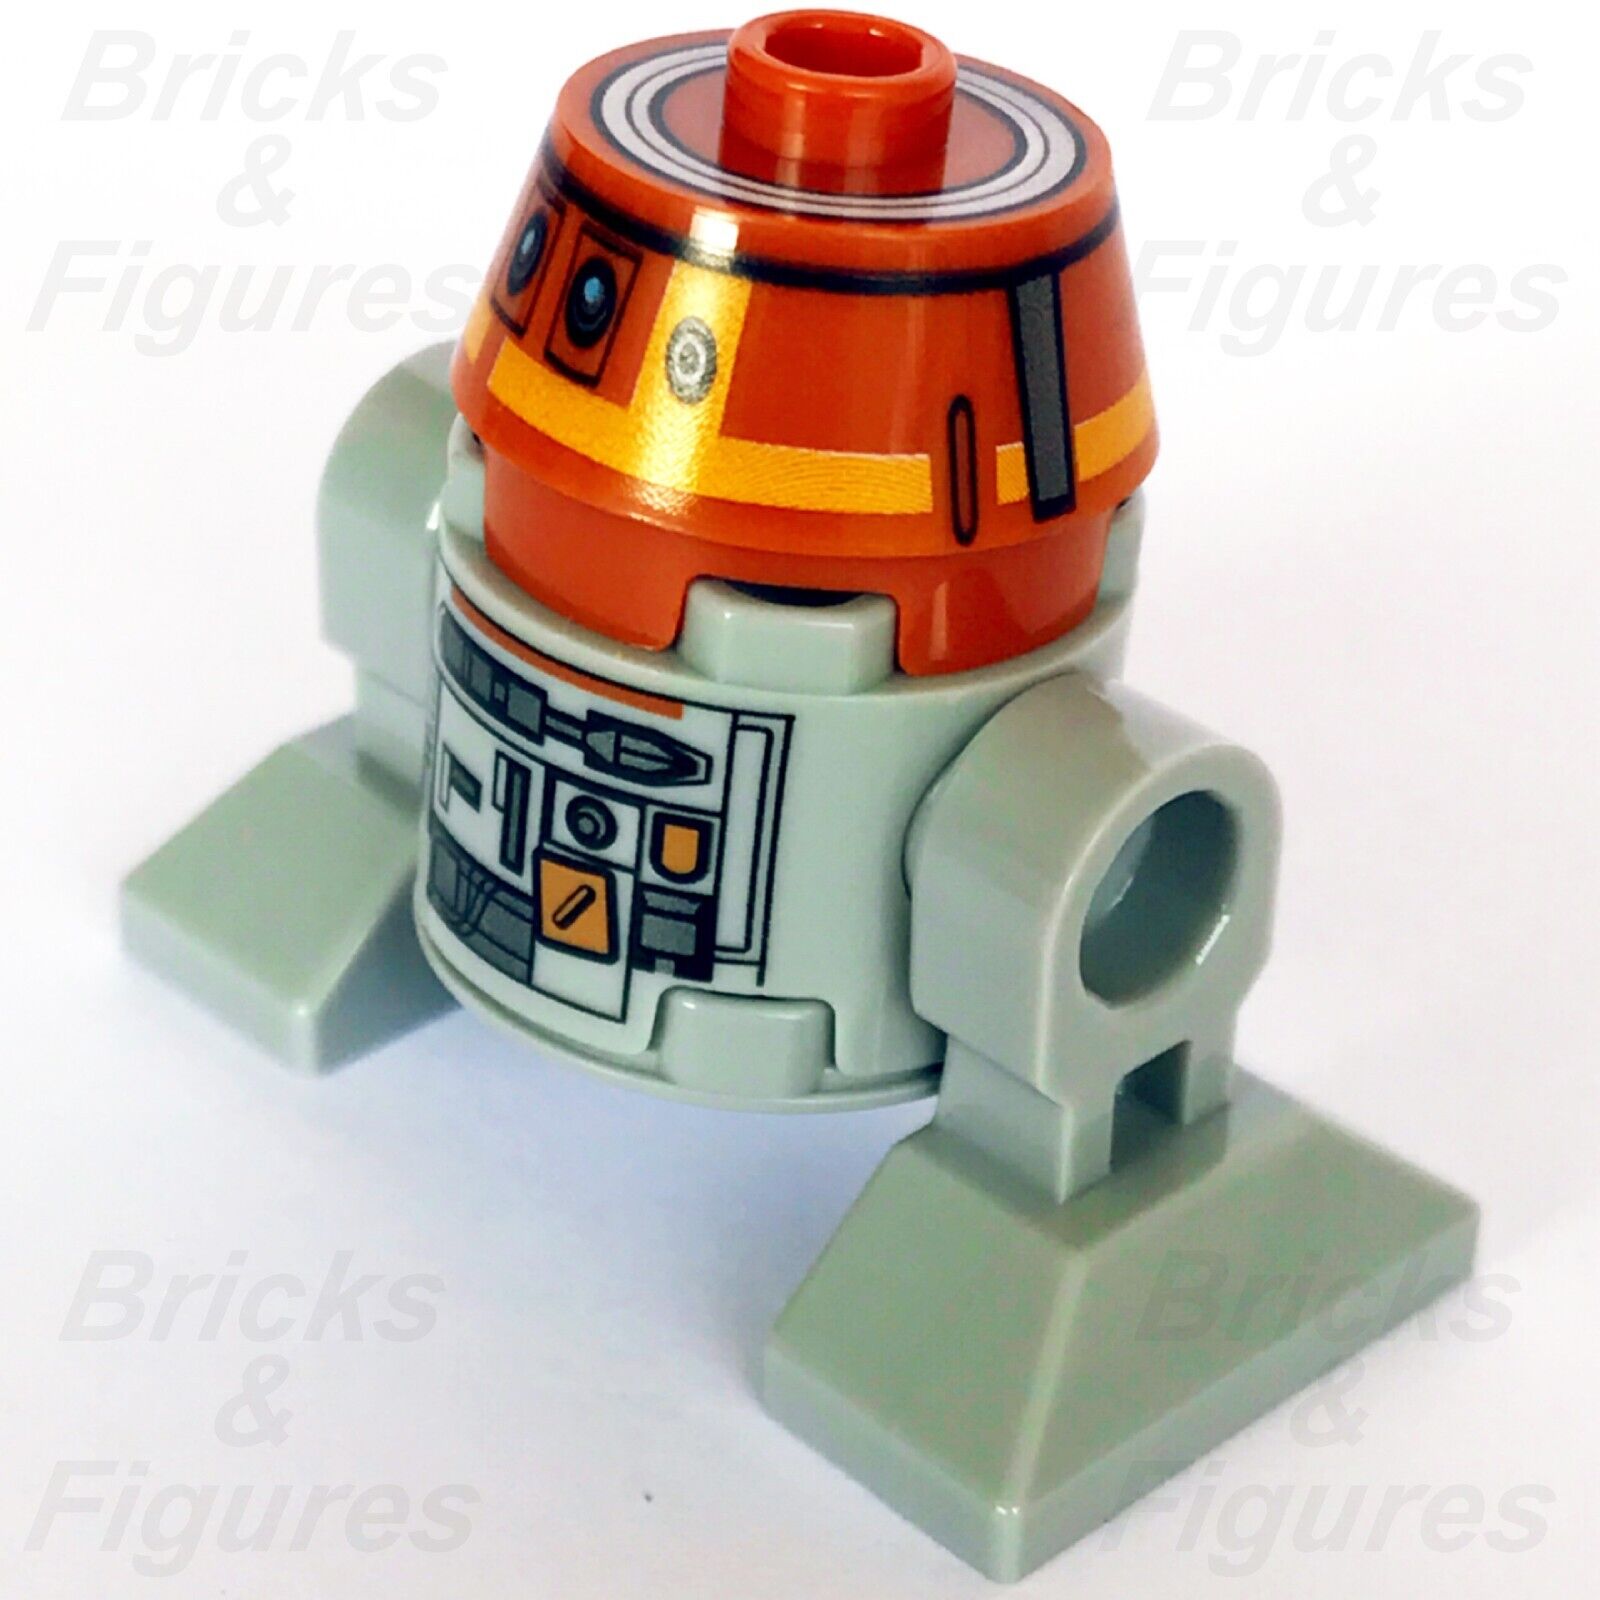 LEGO Star Wars Chopper C1-10P Droid Minifigure Rebels 75158 75048 75170 sw0565